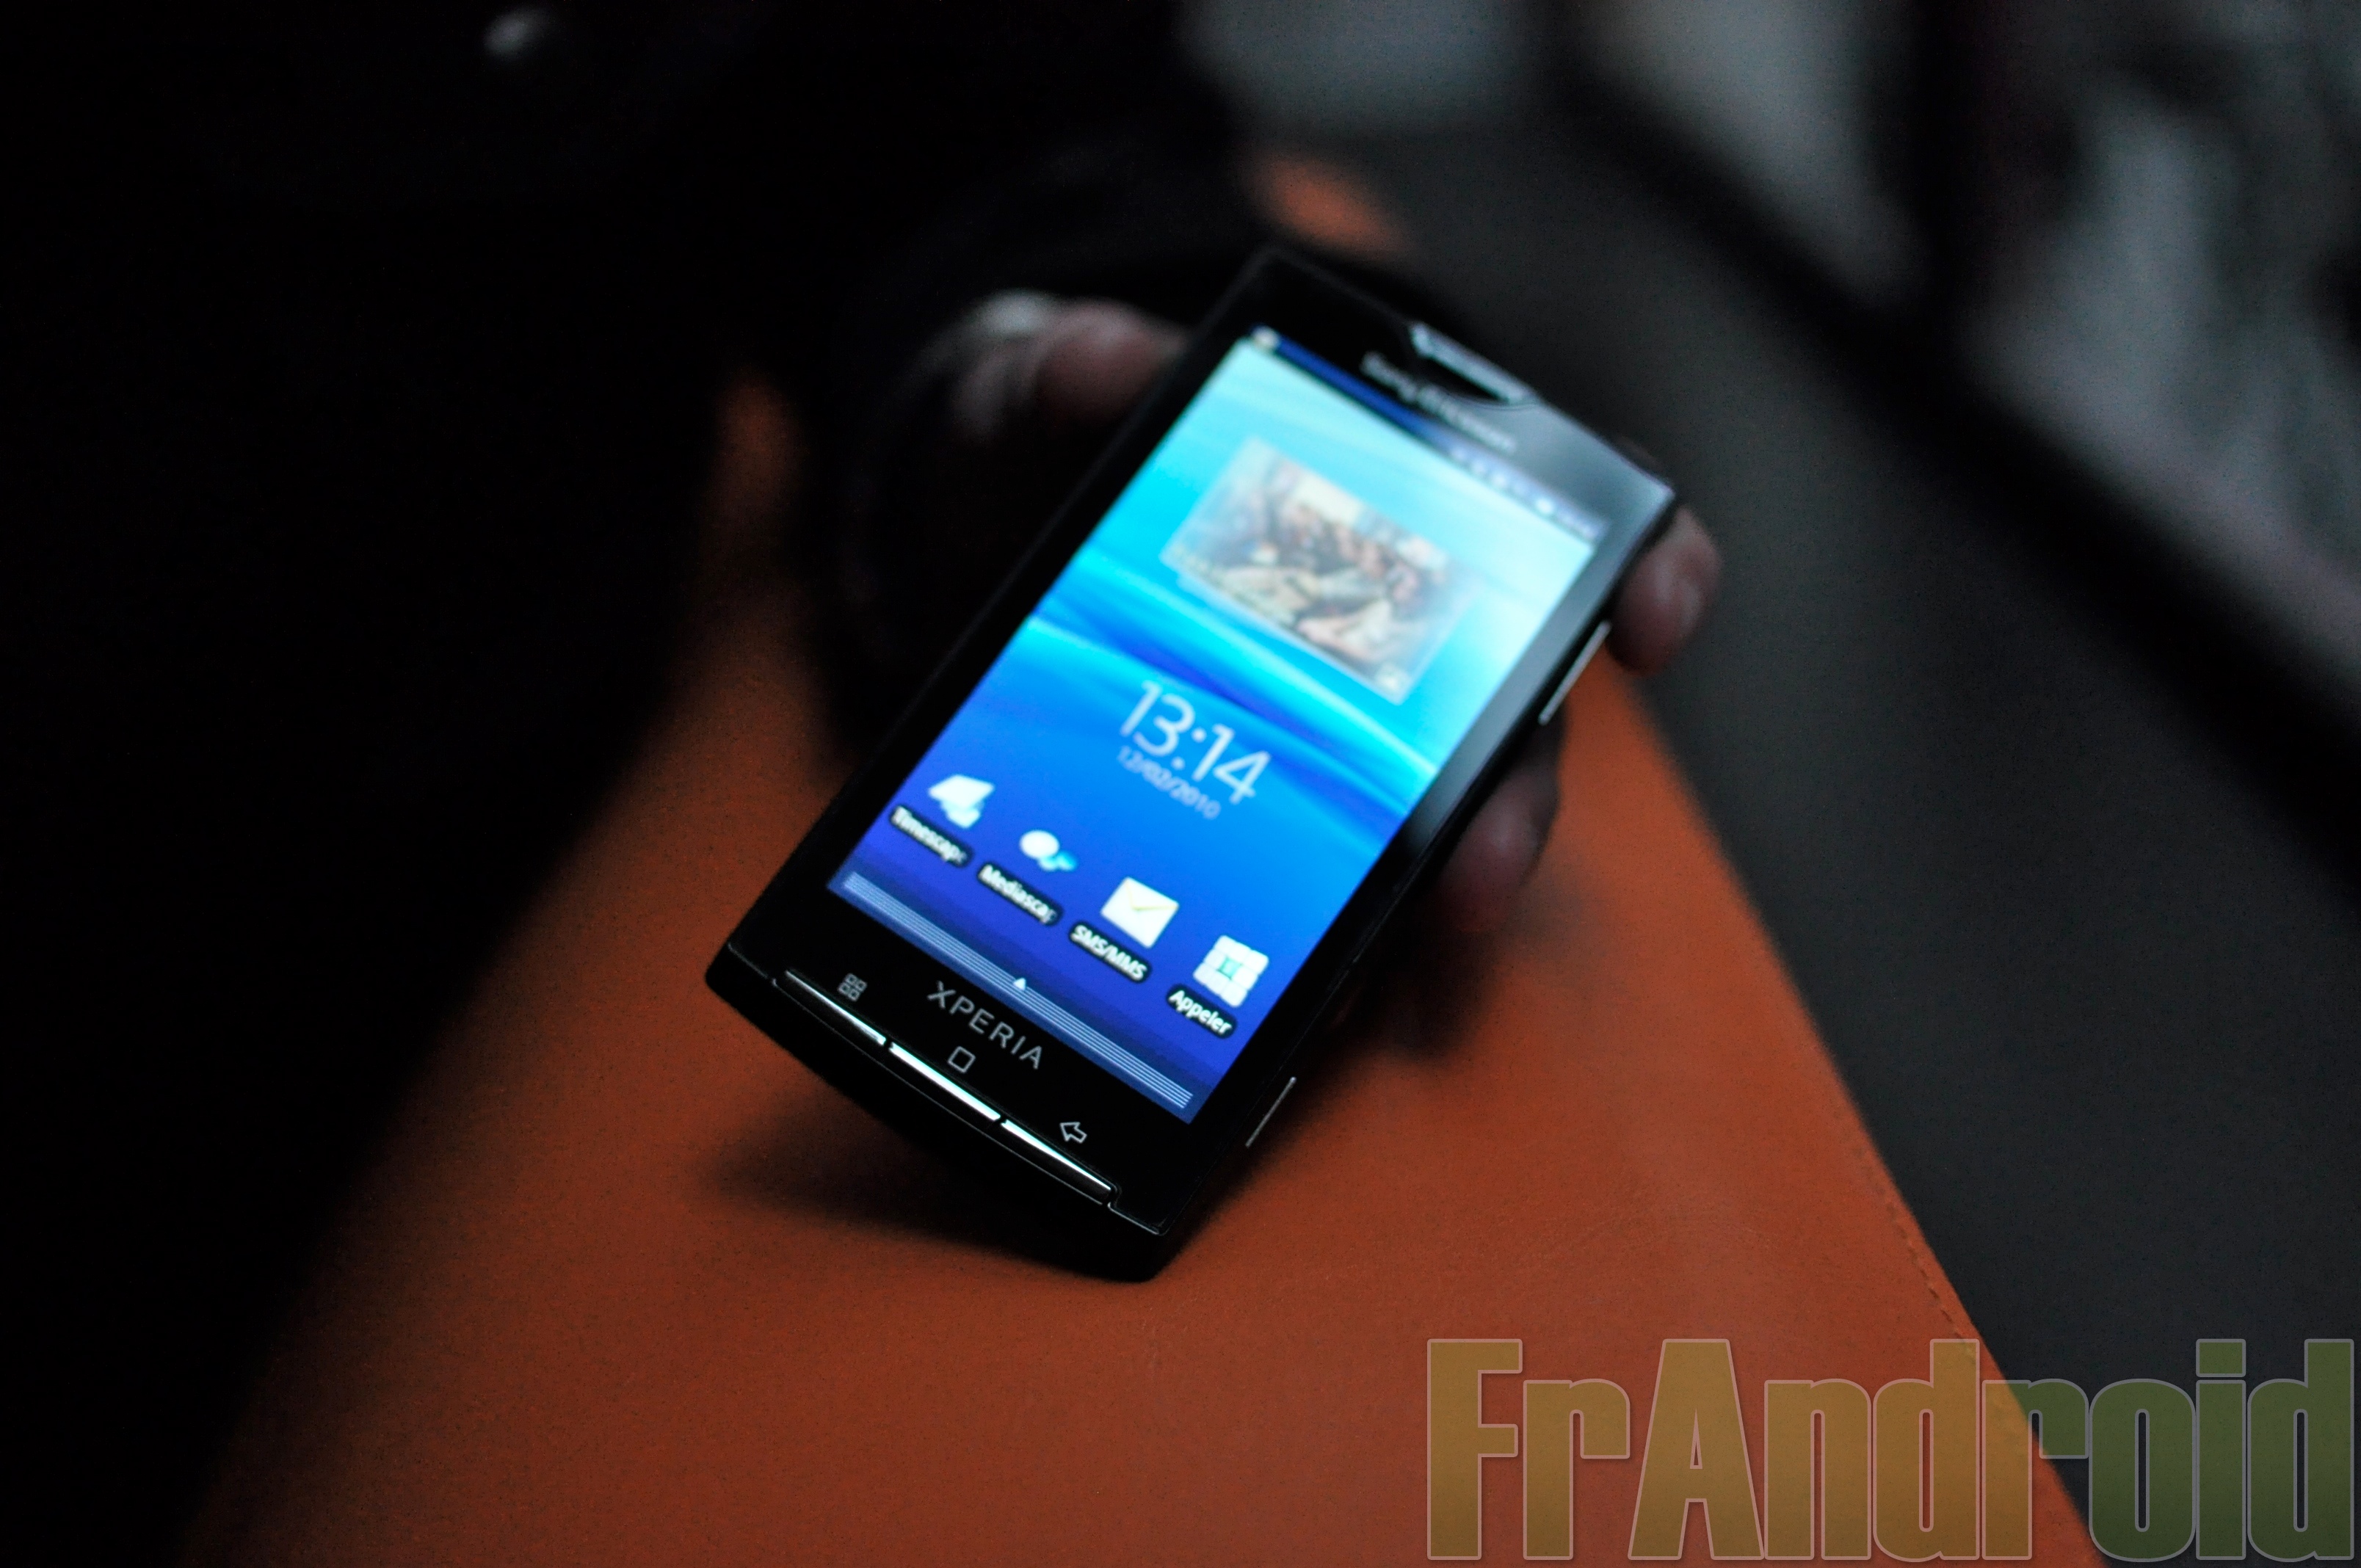 Clef usb 8go 2 en 1 pour smartphone samsung, huawei, sony, etc & pc  micro-usb memoire 8gb (noir)